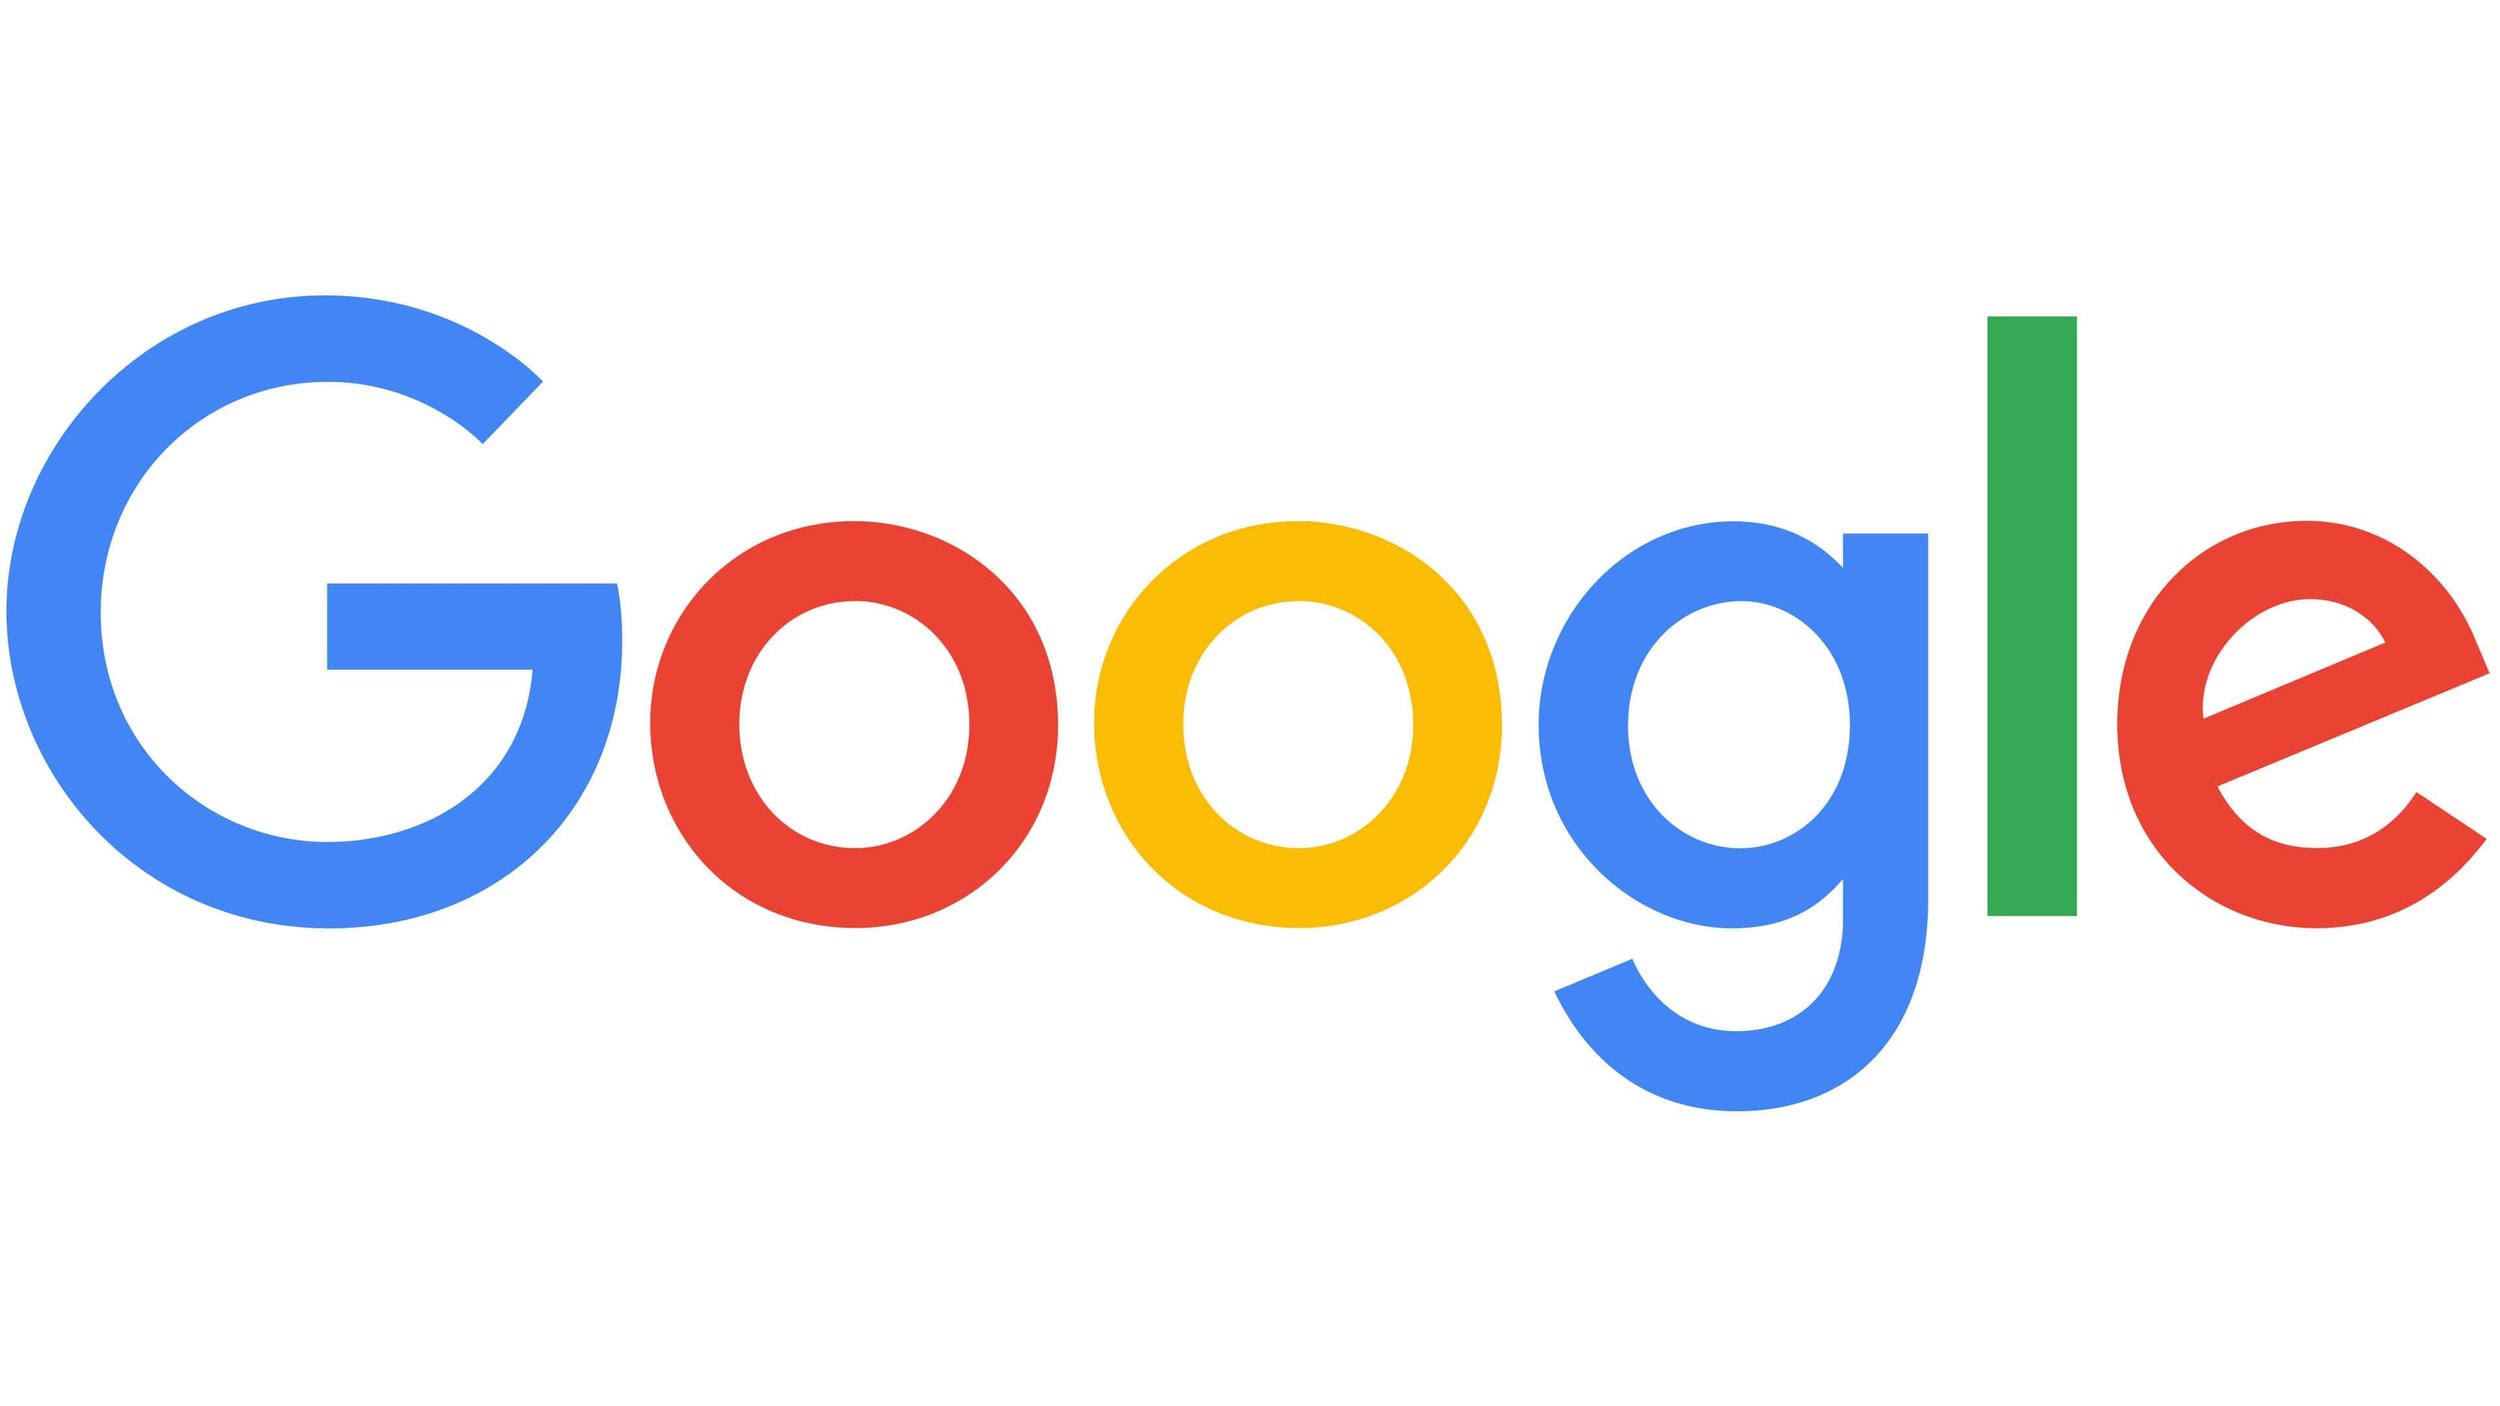 Google-Logo-2015-present.jpg